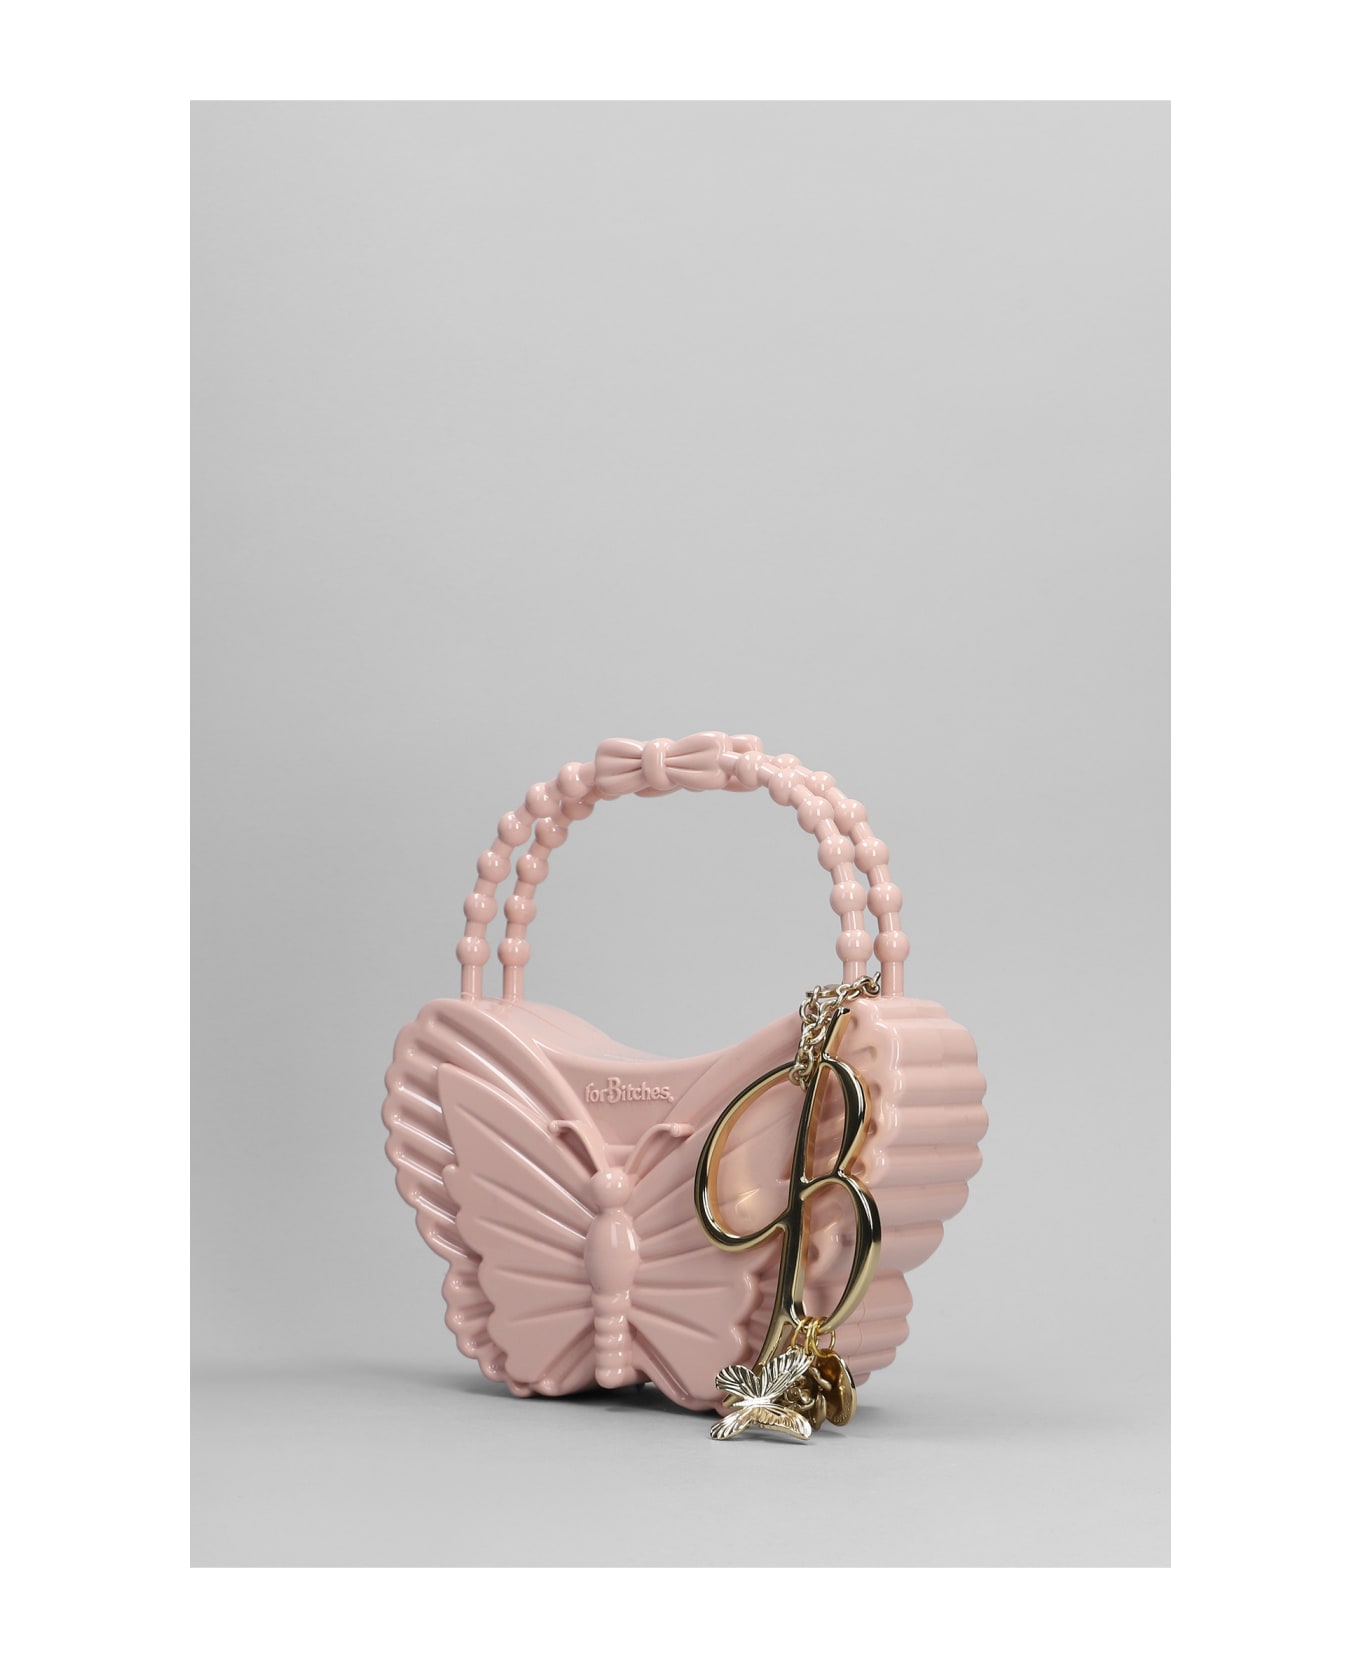 Blumarine Hand Bag In Rose-pink Pvc - rose-pink